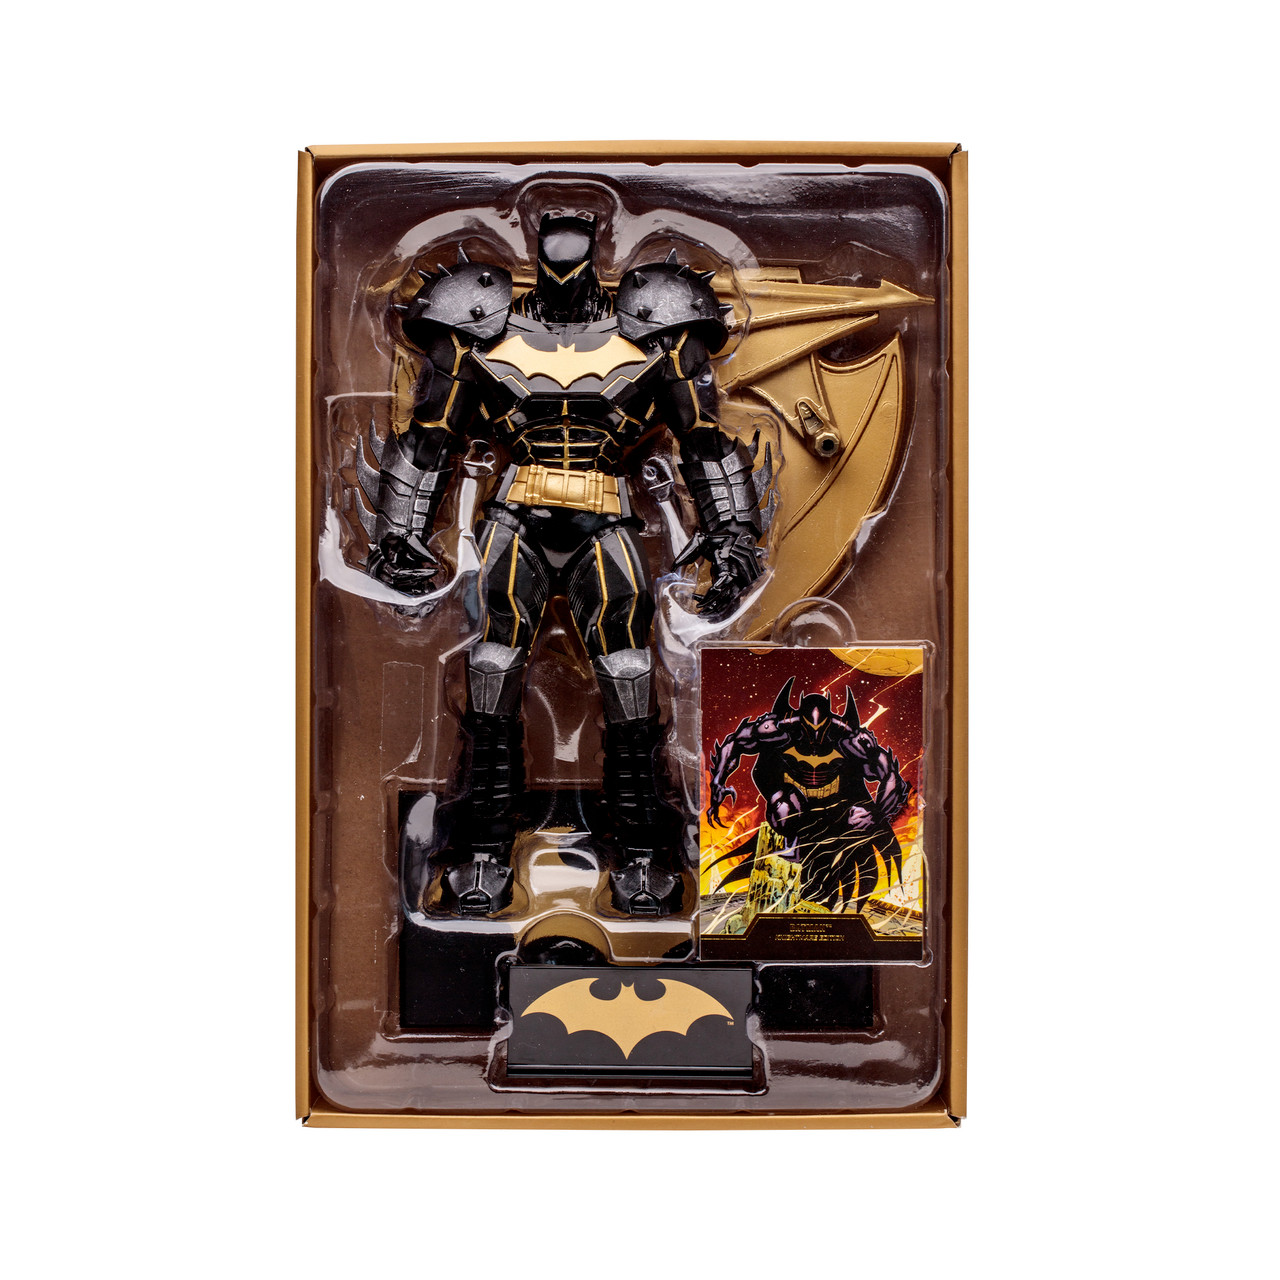 McFarlane DC Multiverse Batman Knightmare Edition(Gold Label)画像